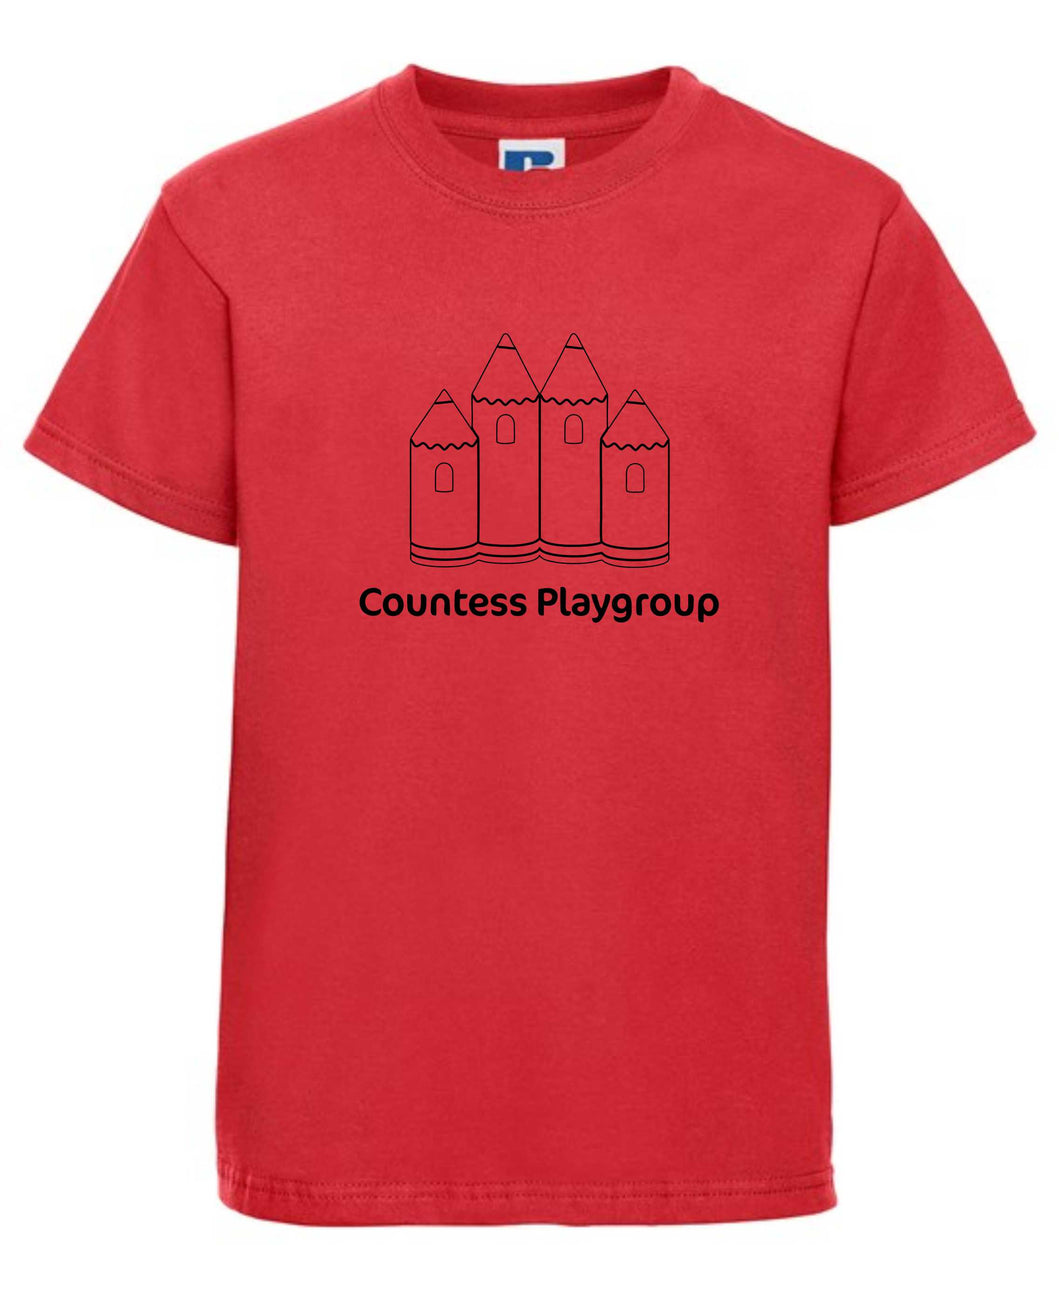 Countess Playgroup T-Shirt